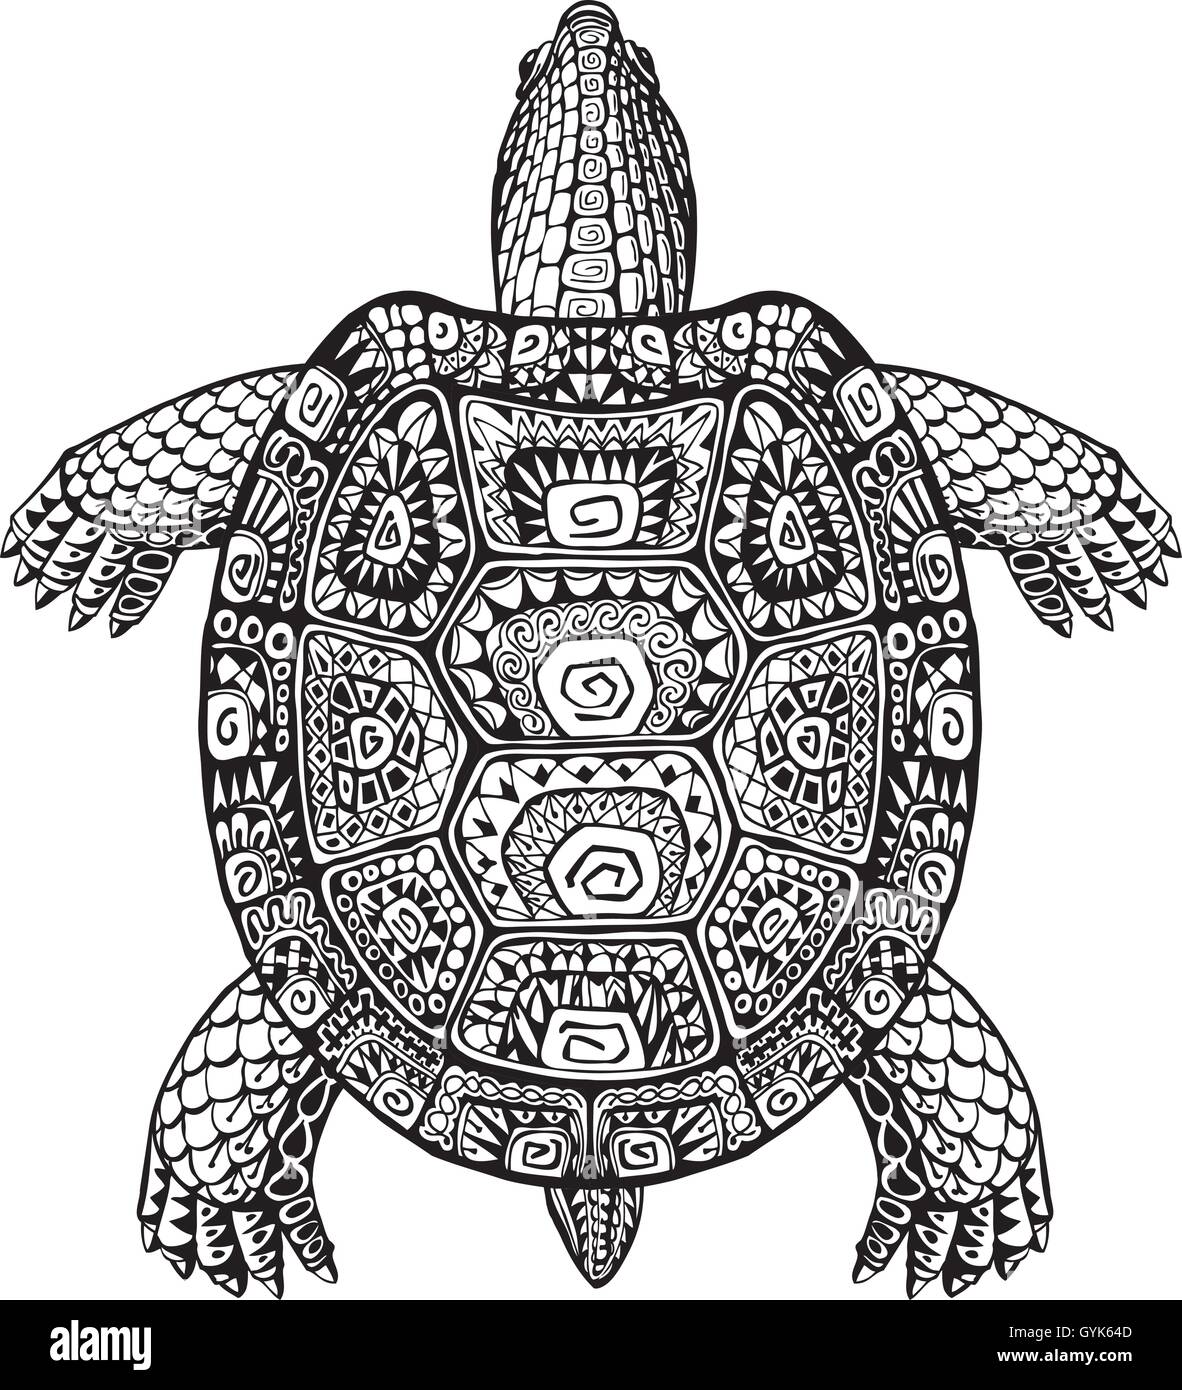 Schildkröte ethnischen Grafikstil mit dekorativen Mustern. Vektor-illustration Stock Vektor